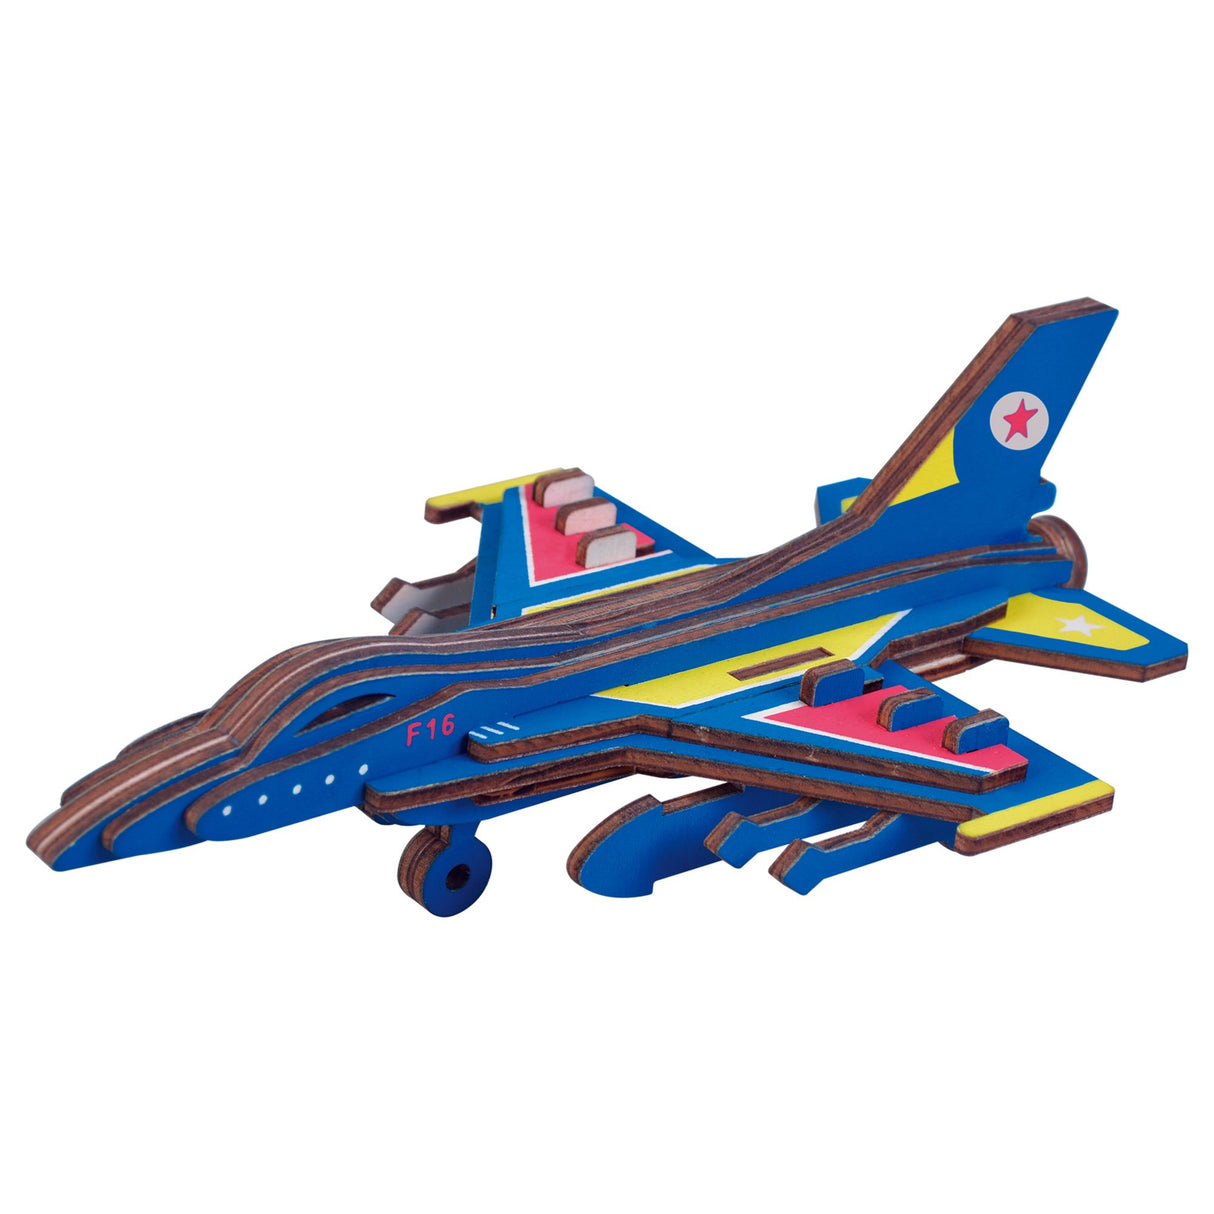 Wood F-16 Fighter Plane Model Kit - Wooden Laser-Cut 3D Puzzle (23 Pcs) in Blue color